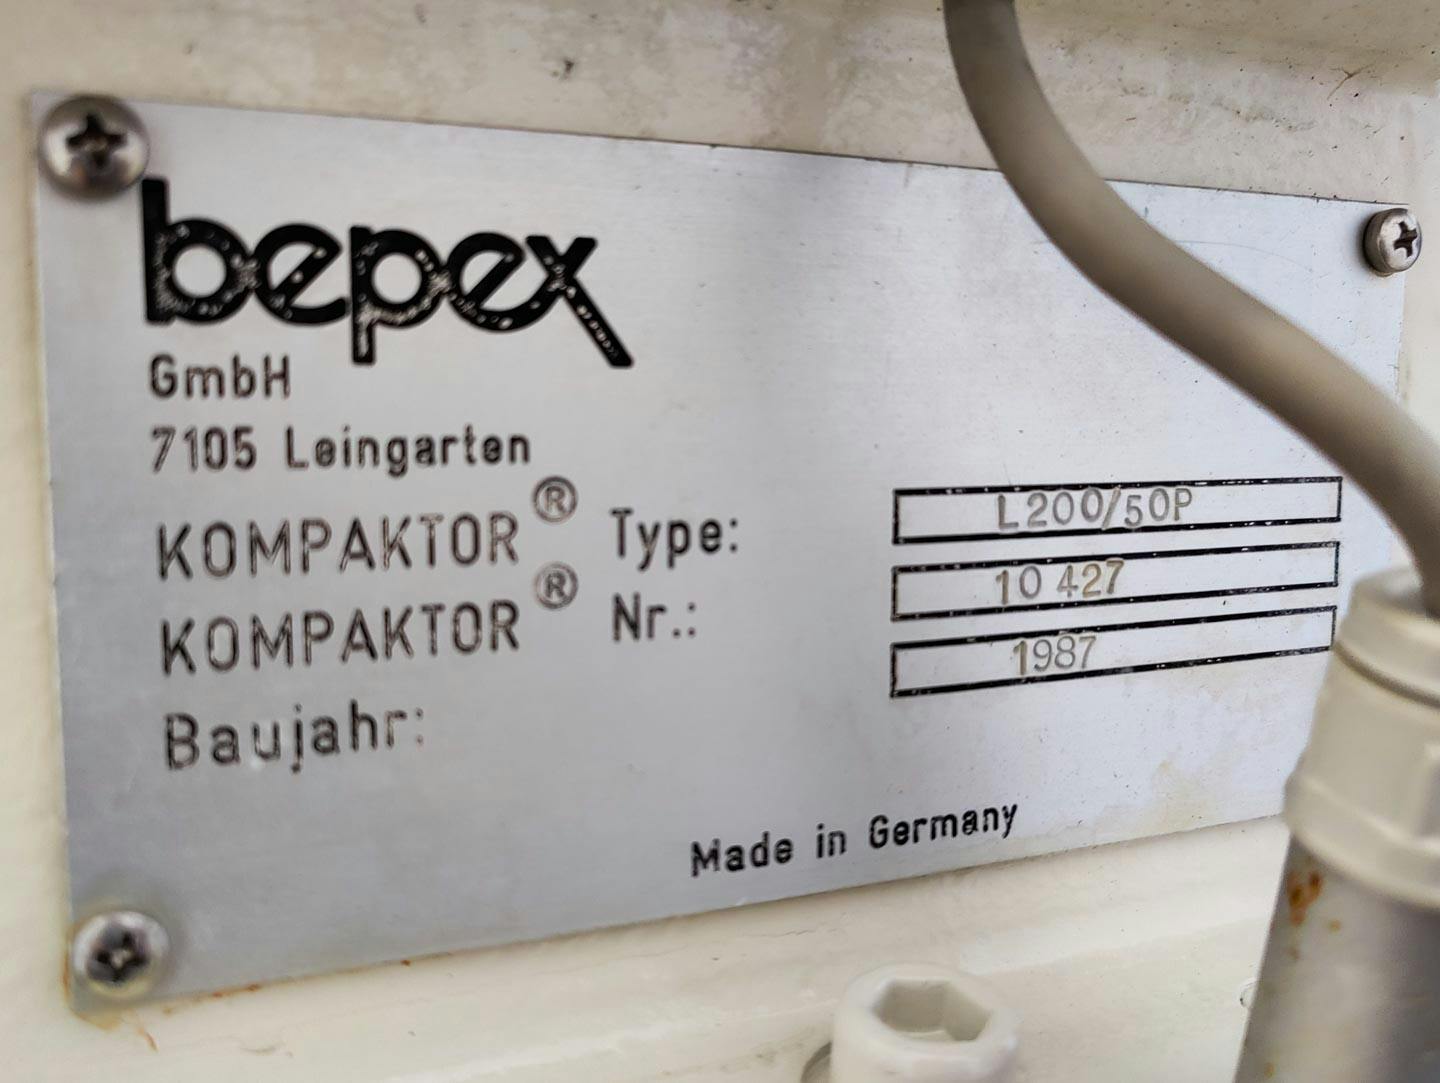 Bepex L-200/50P - Walzenkompaktor - image 14